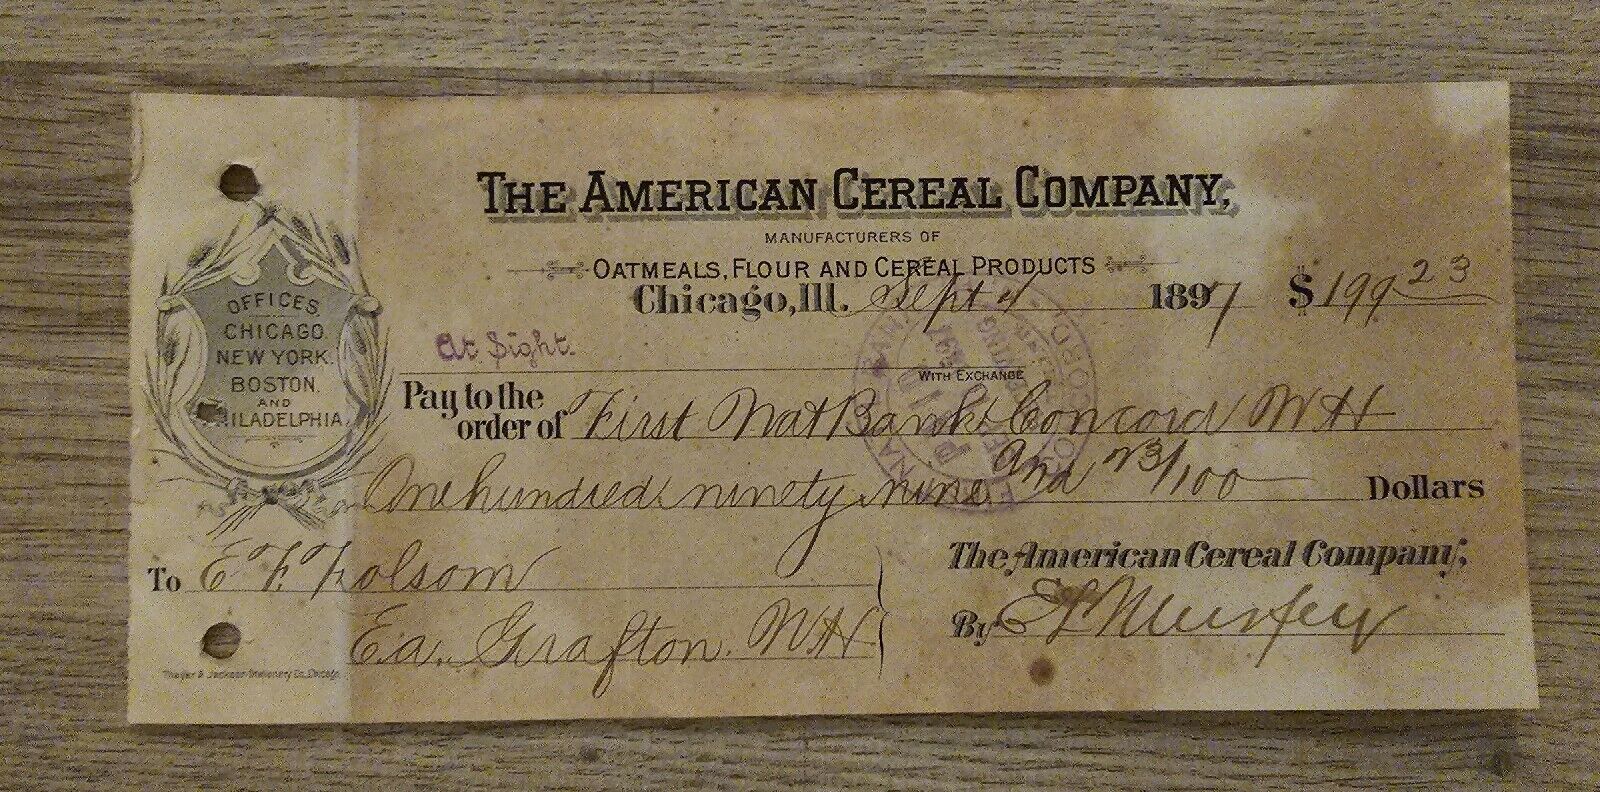 1897 The American Cereal Company Illustrated Check Chicago, IL